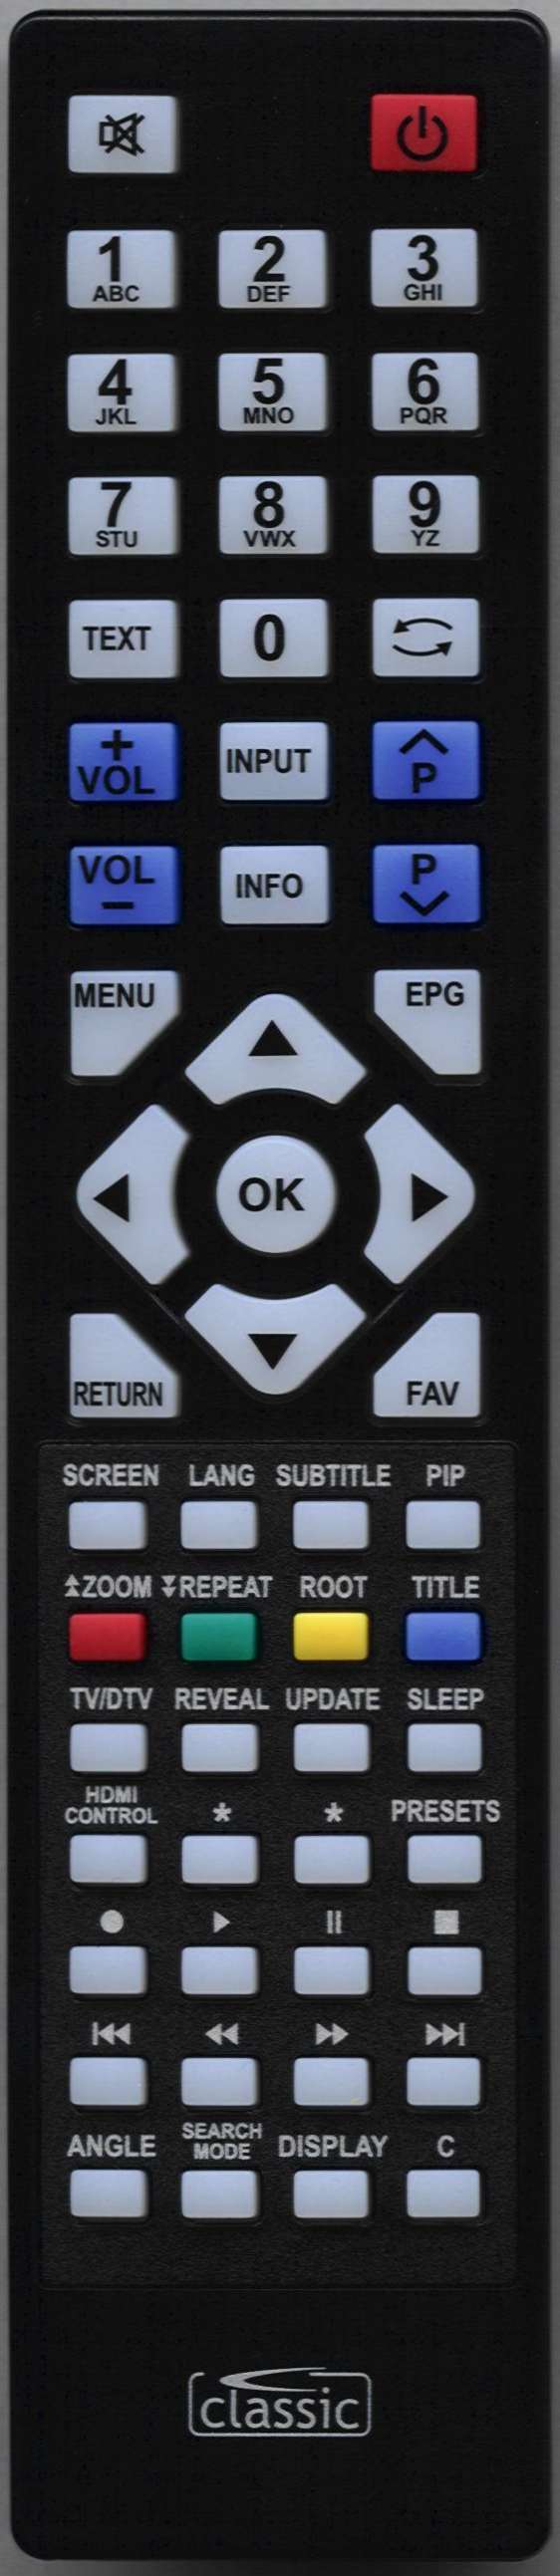 OKI L24VB-FHDTUV Remote Control